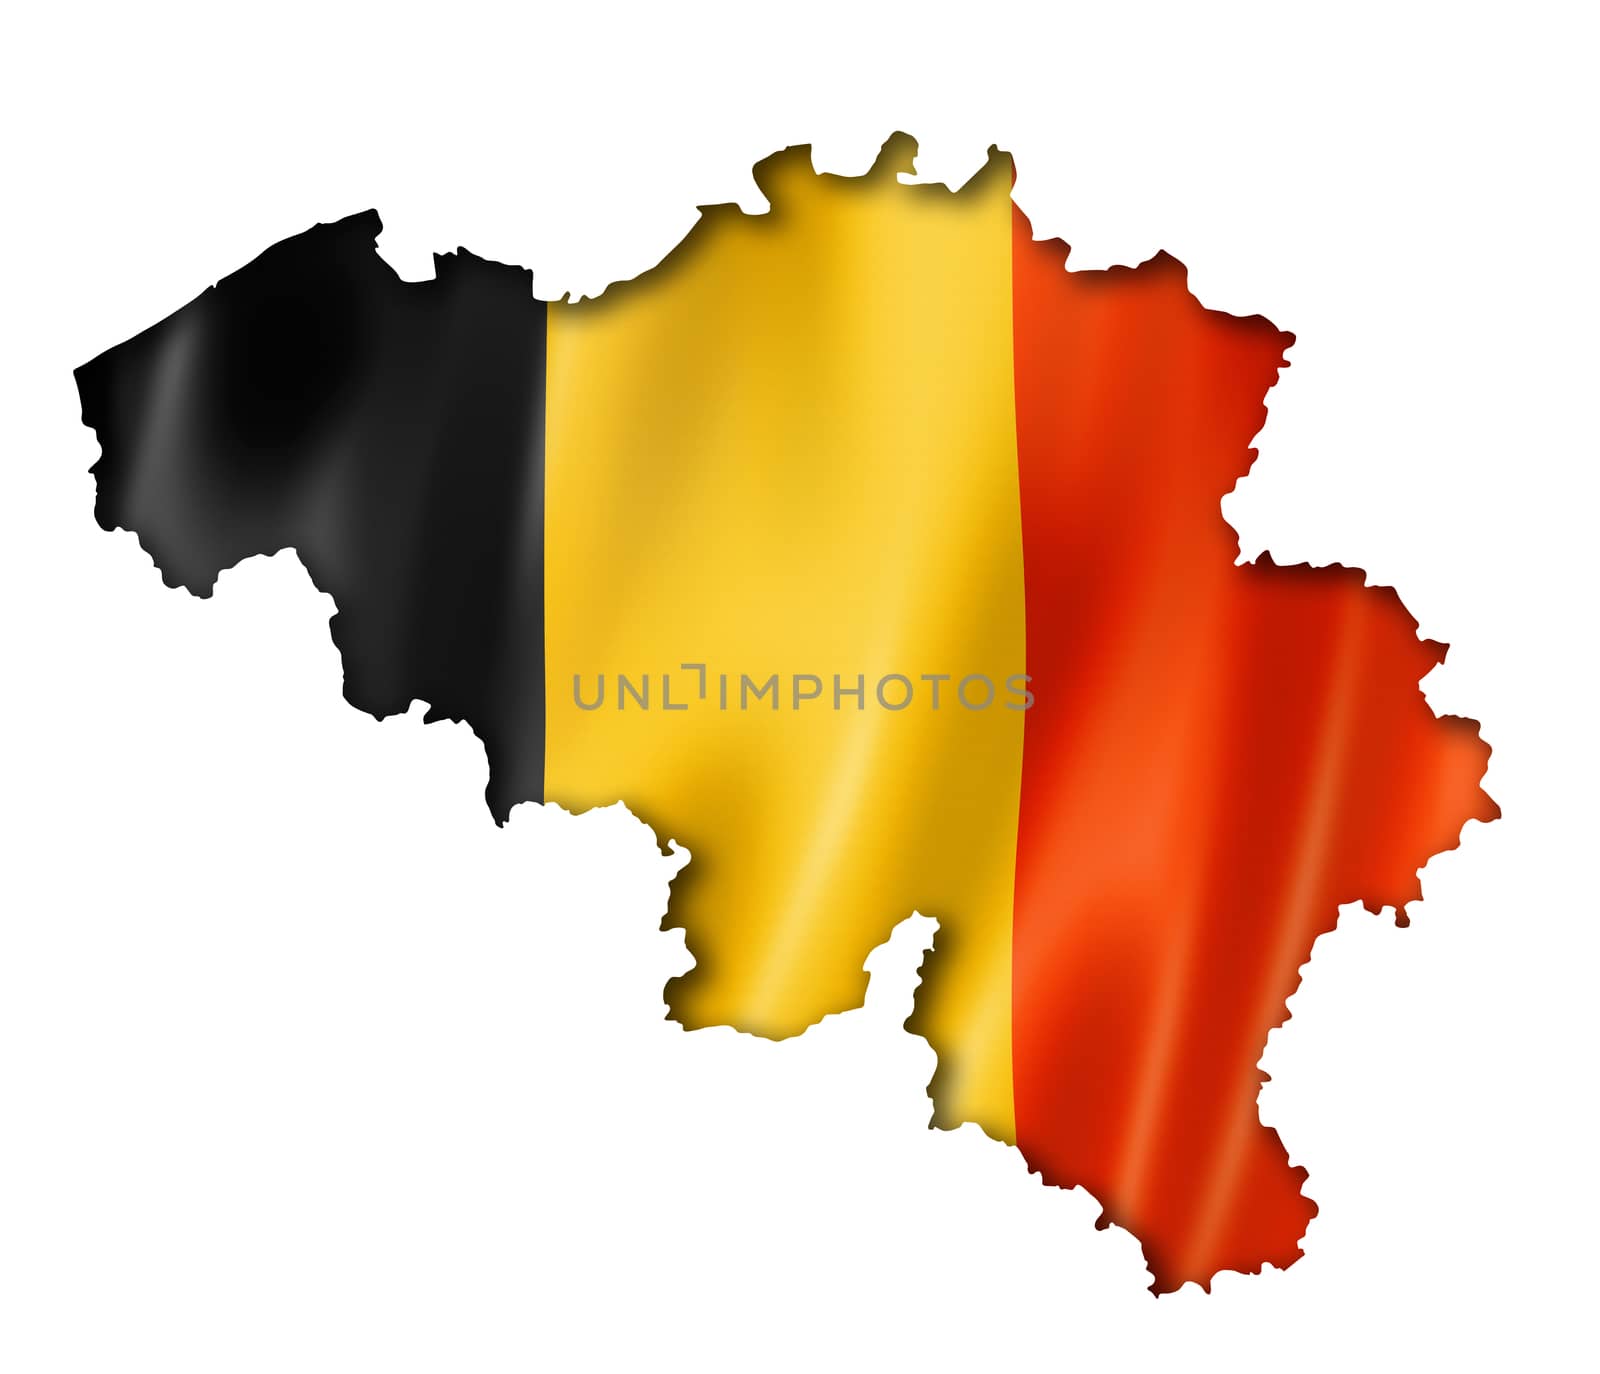 Belgian flag map by daboost